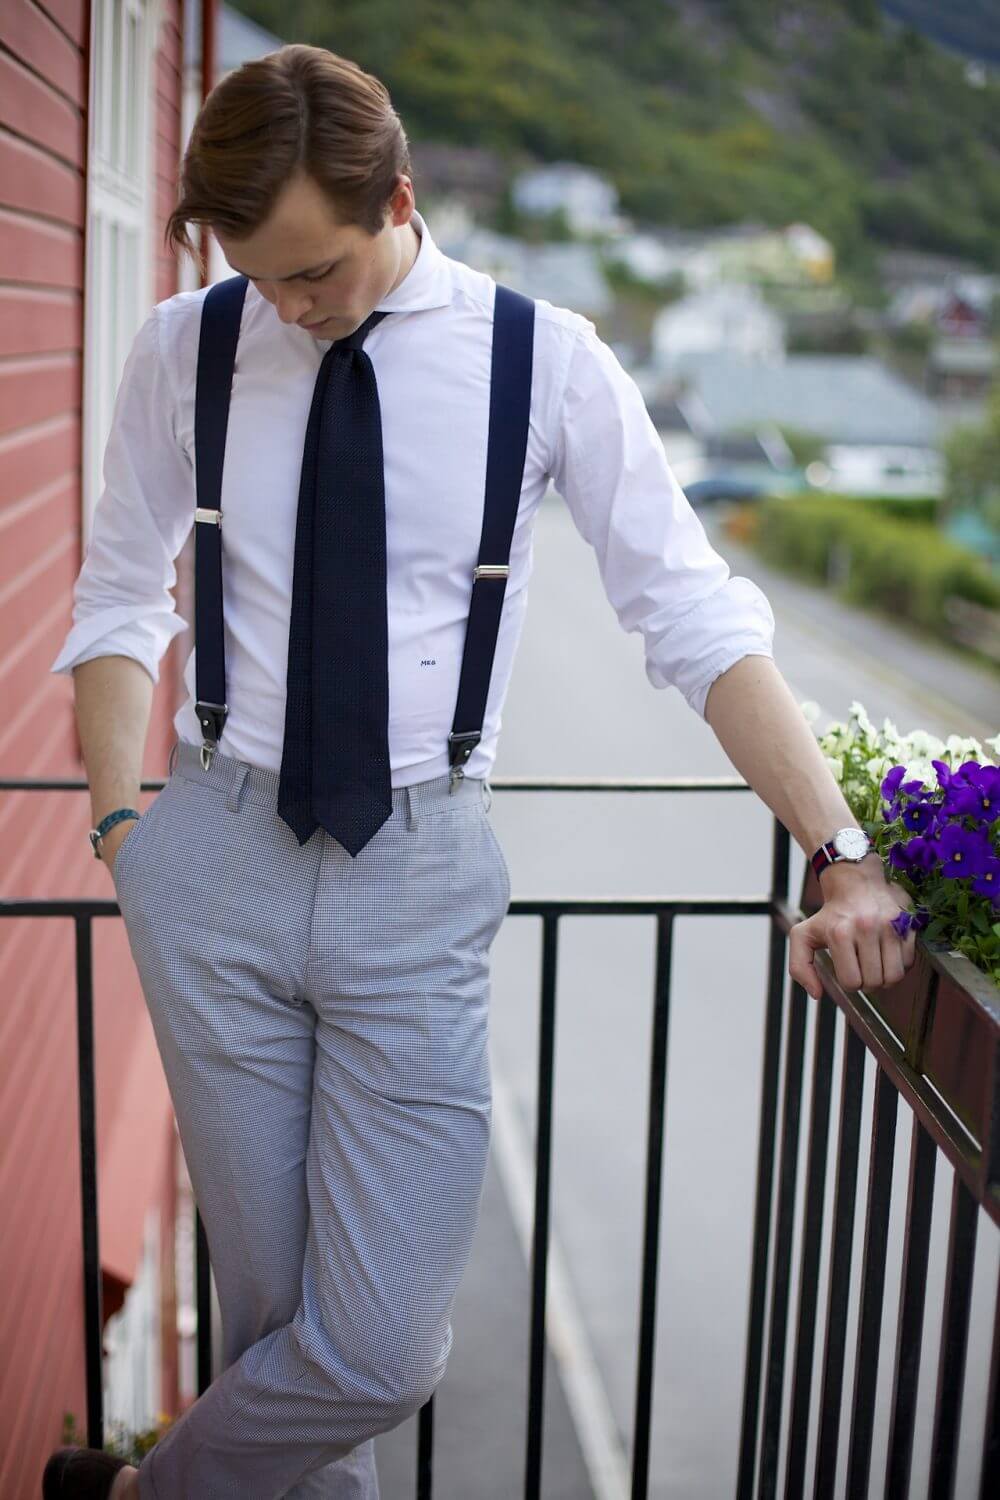 Suspenders (Braceys) give men's coordination a sophisticated look